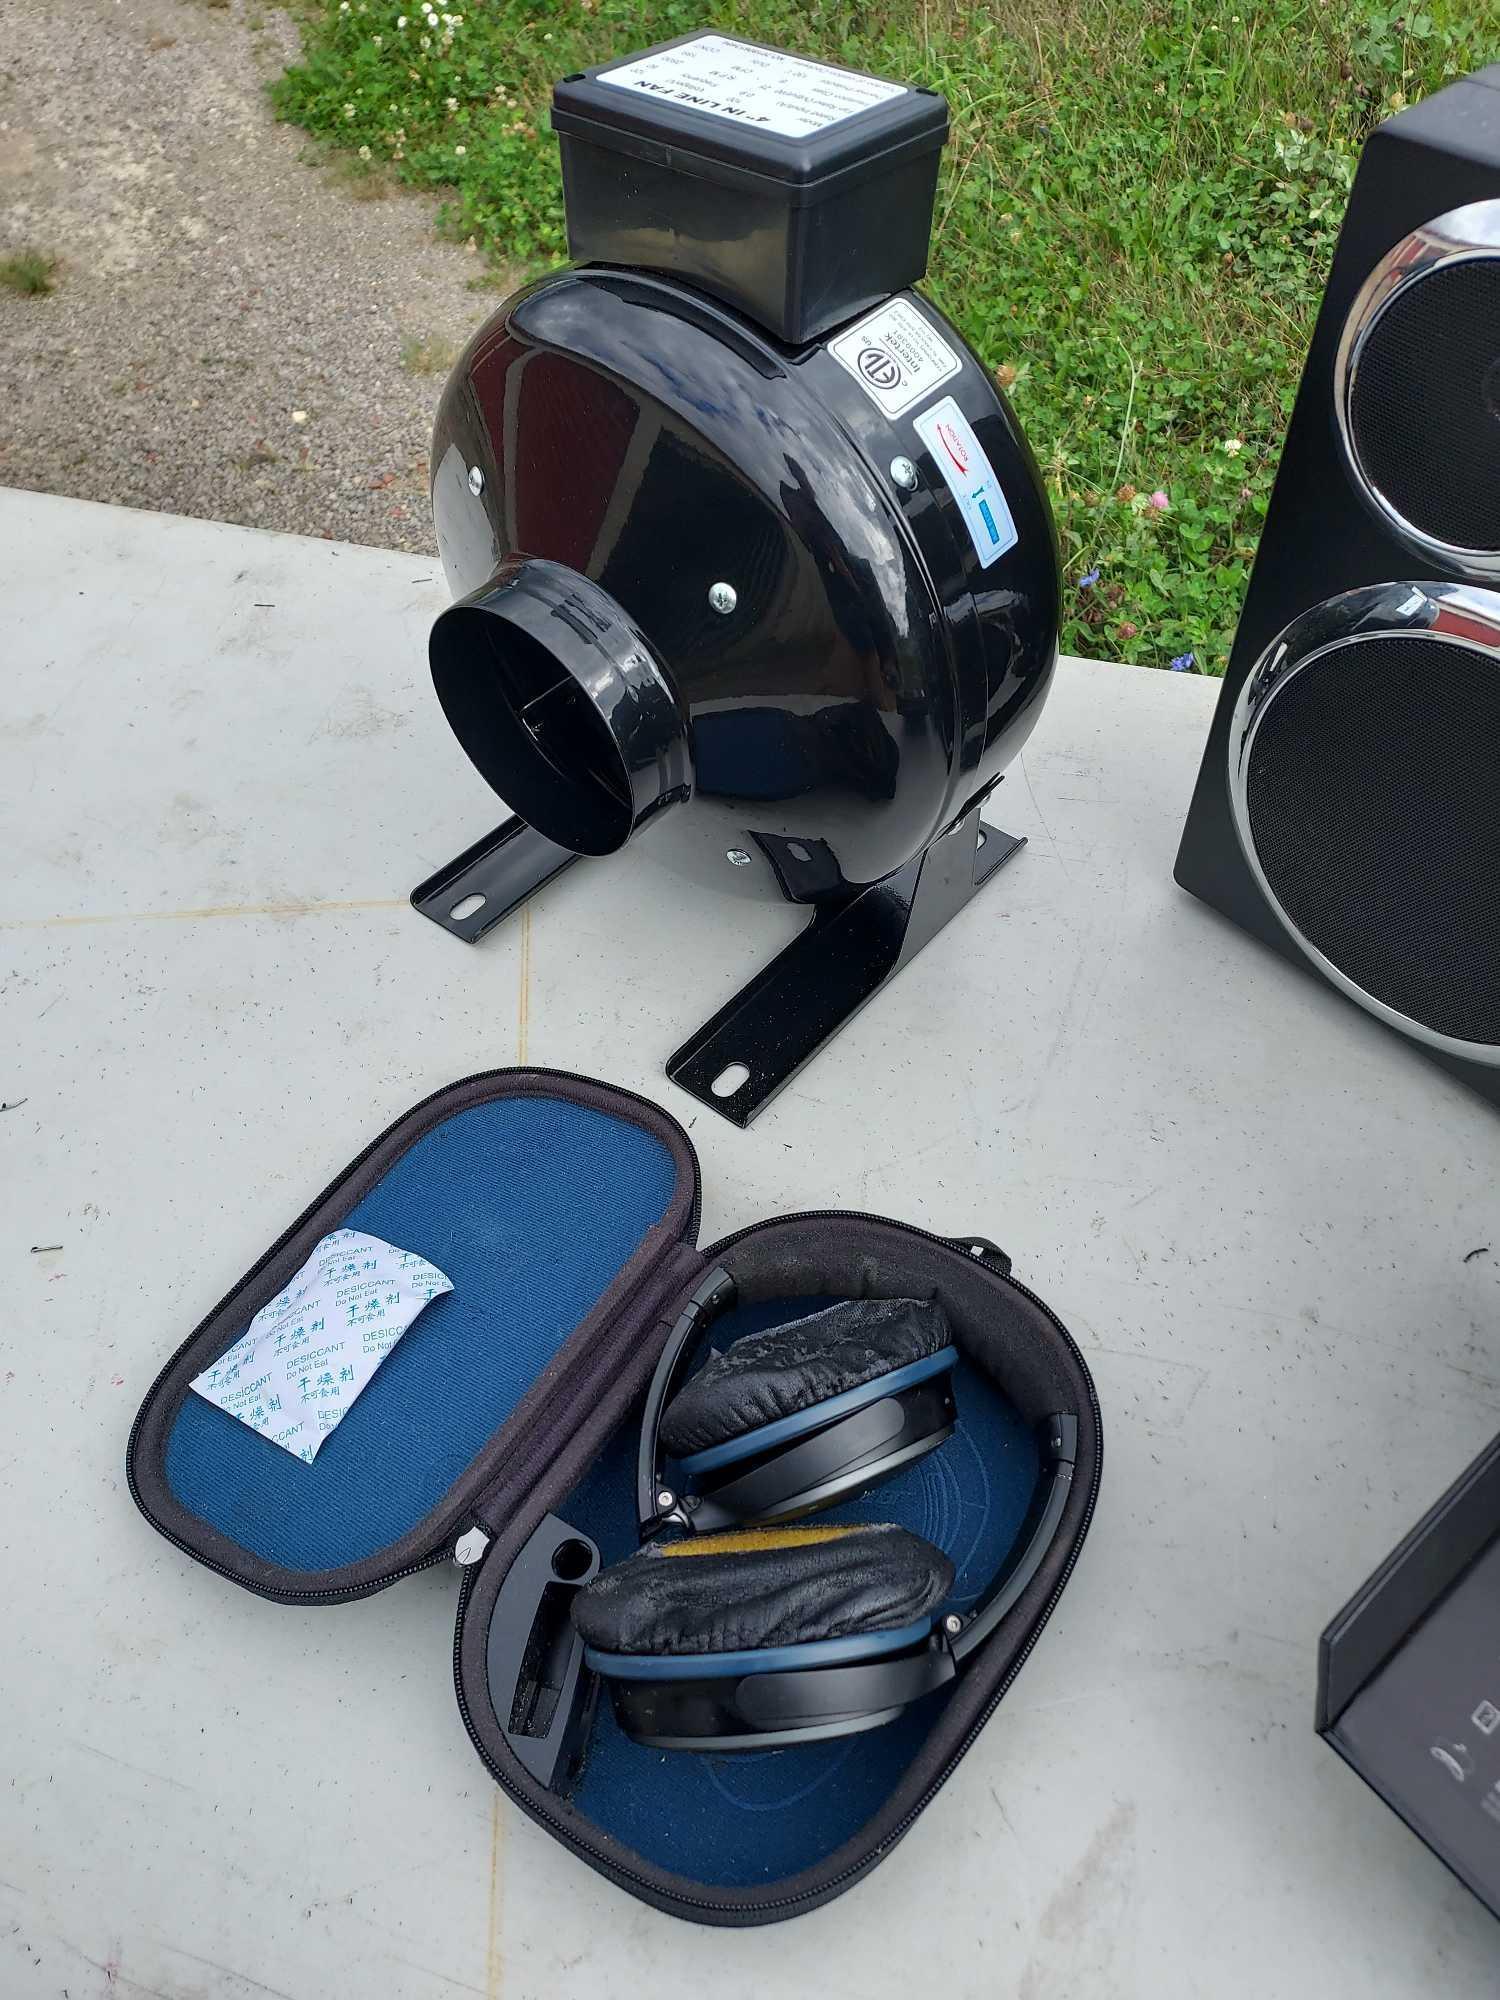 GPO Boombox, In-Line Fan, NobiPren Headphone, & Bose Headphones